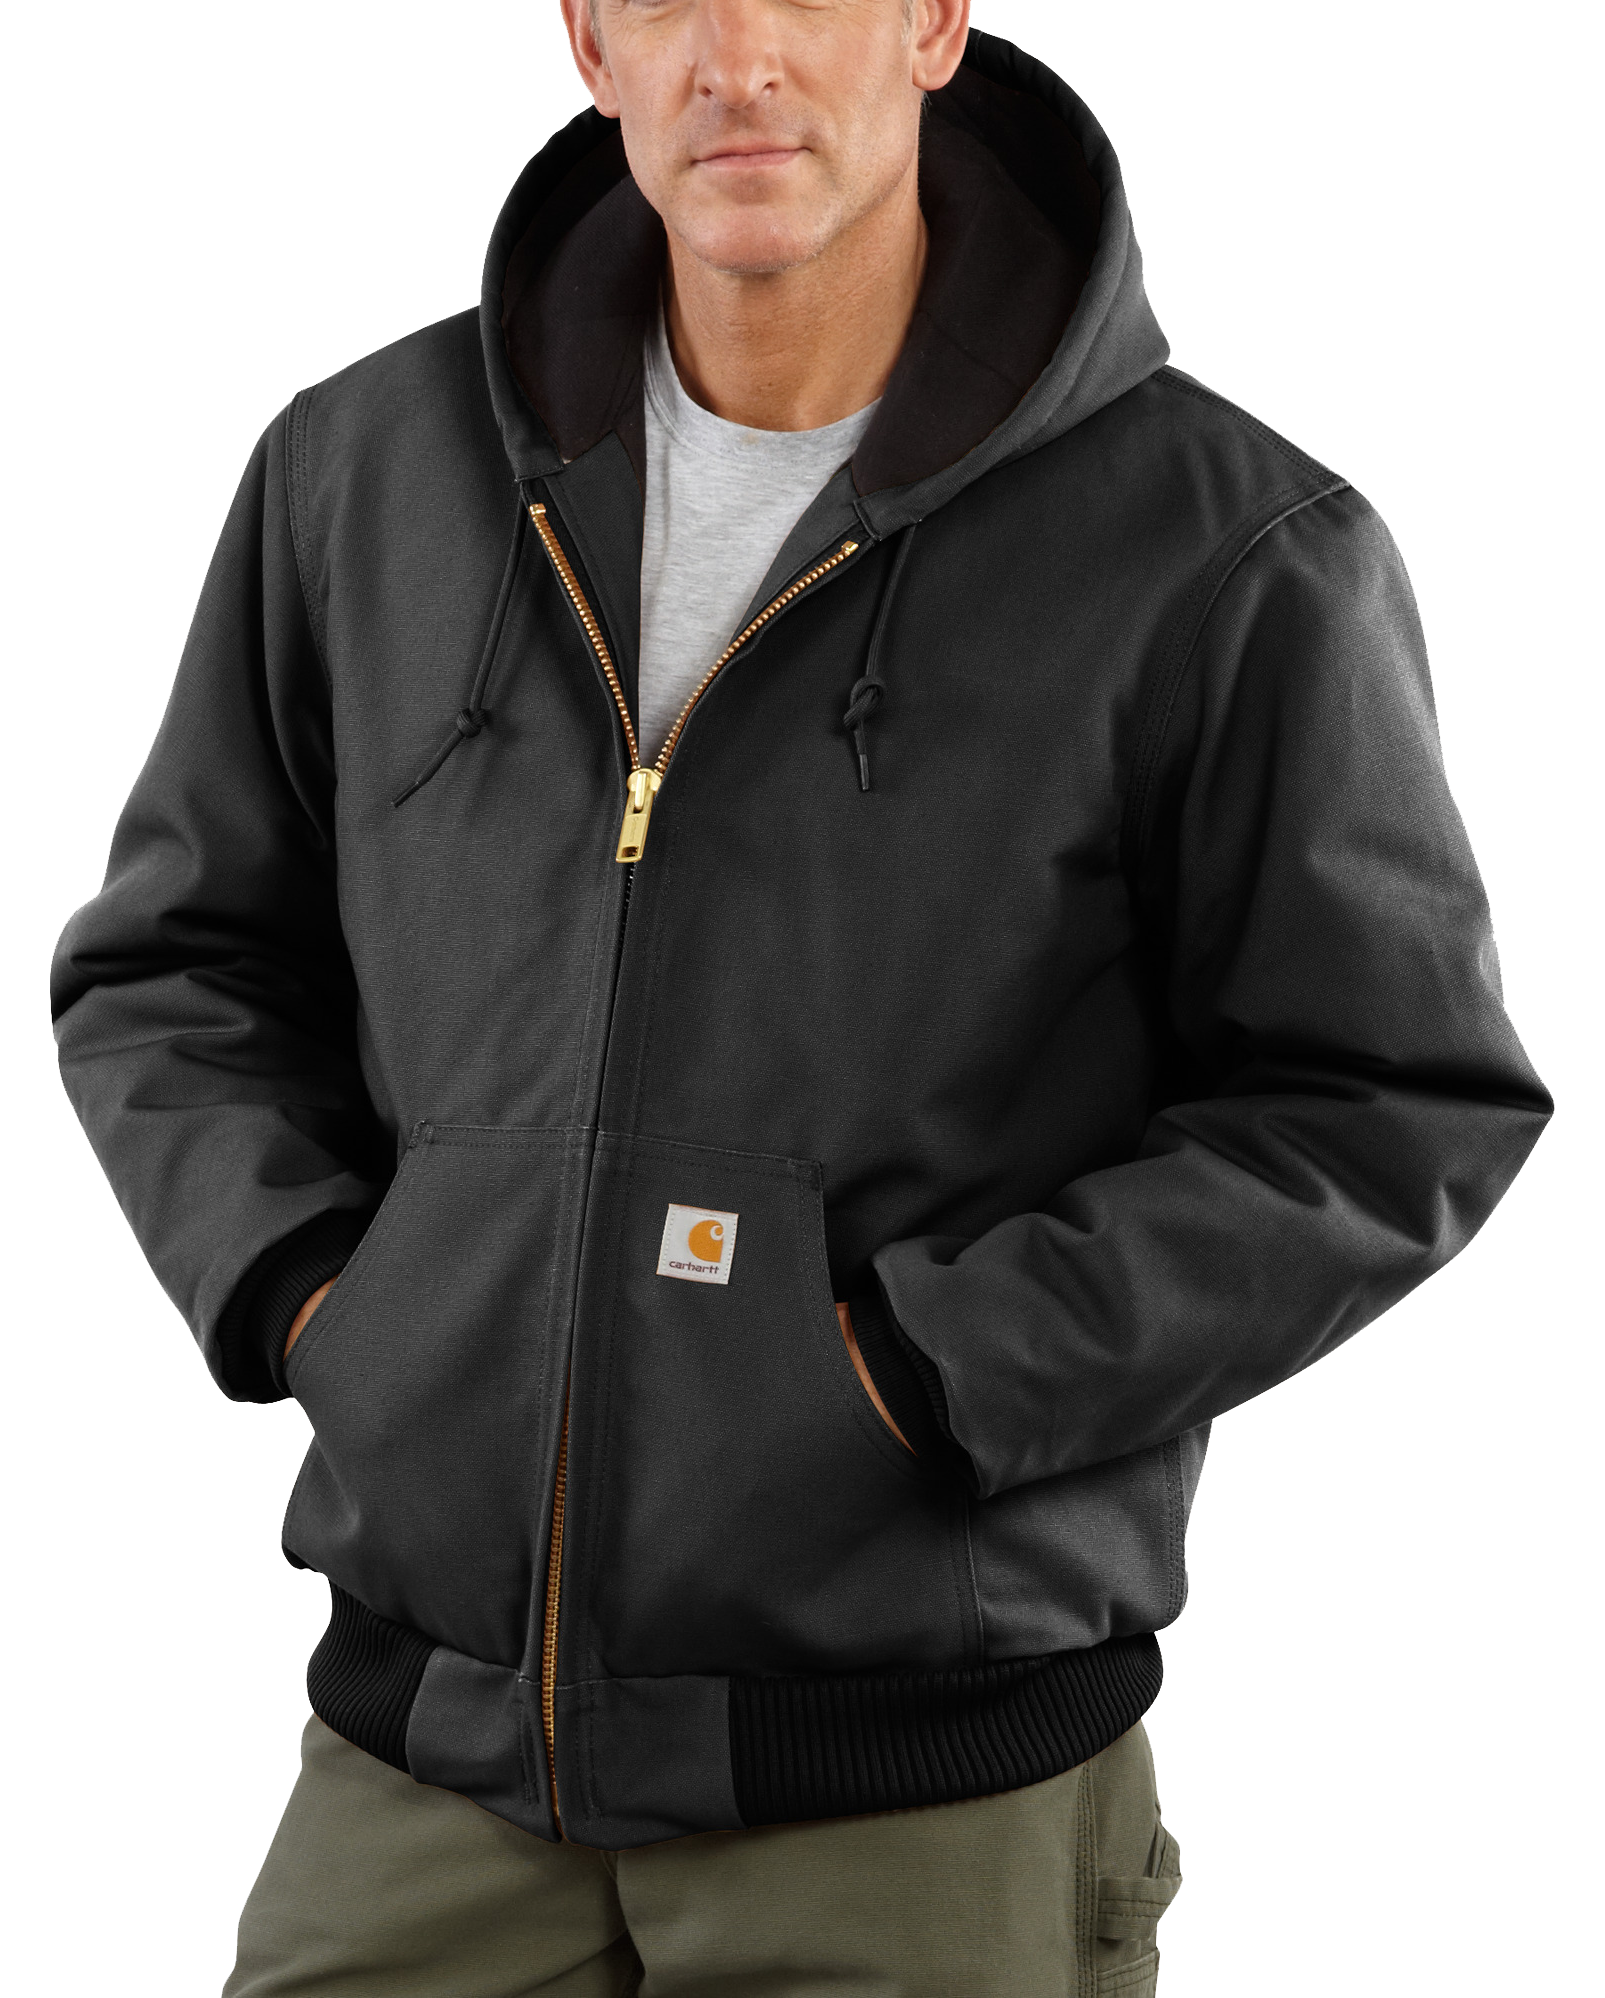 Fishing Jacket For Men Outdoor Fish Jacket Detachable Hooded Tear Resistant  Waterproof Military Style Mountain Jacket Work Coat